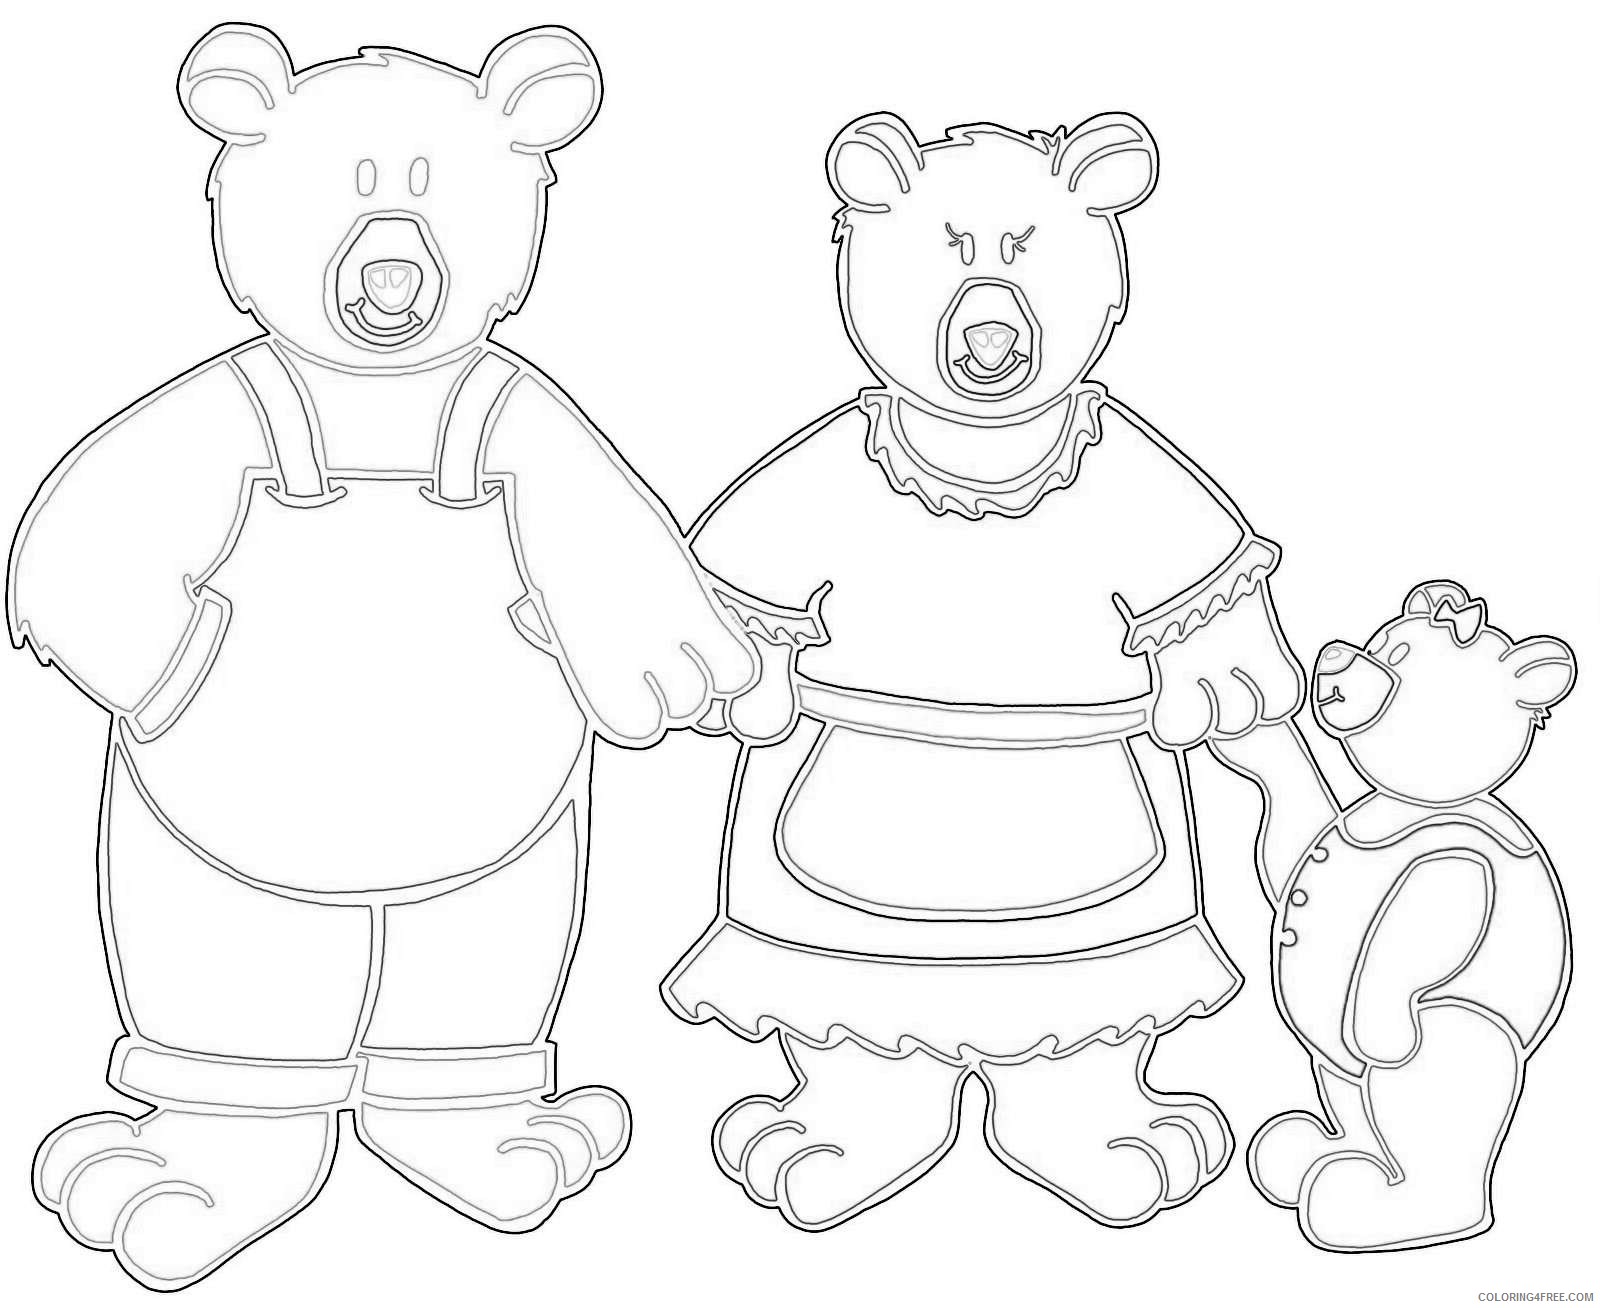 Goldilocks And The Three Bears Co 9Smbts Coloring - Coloring4Free.com